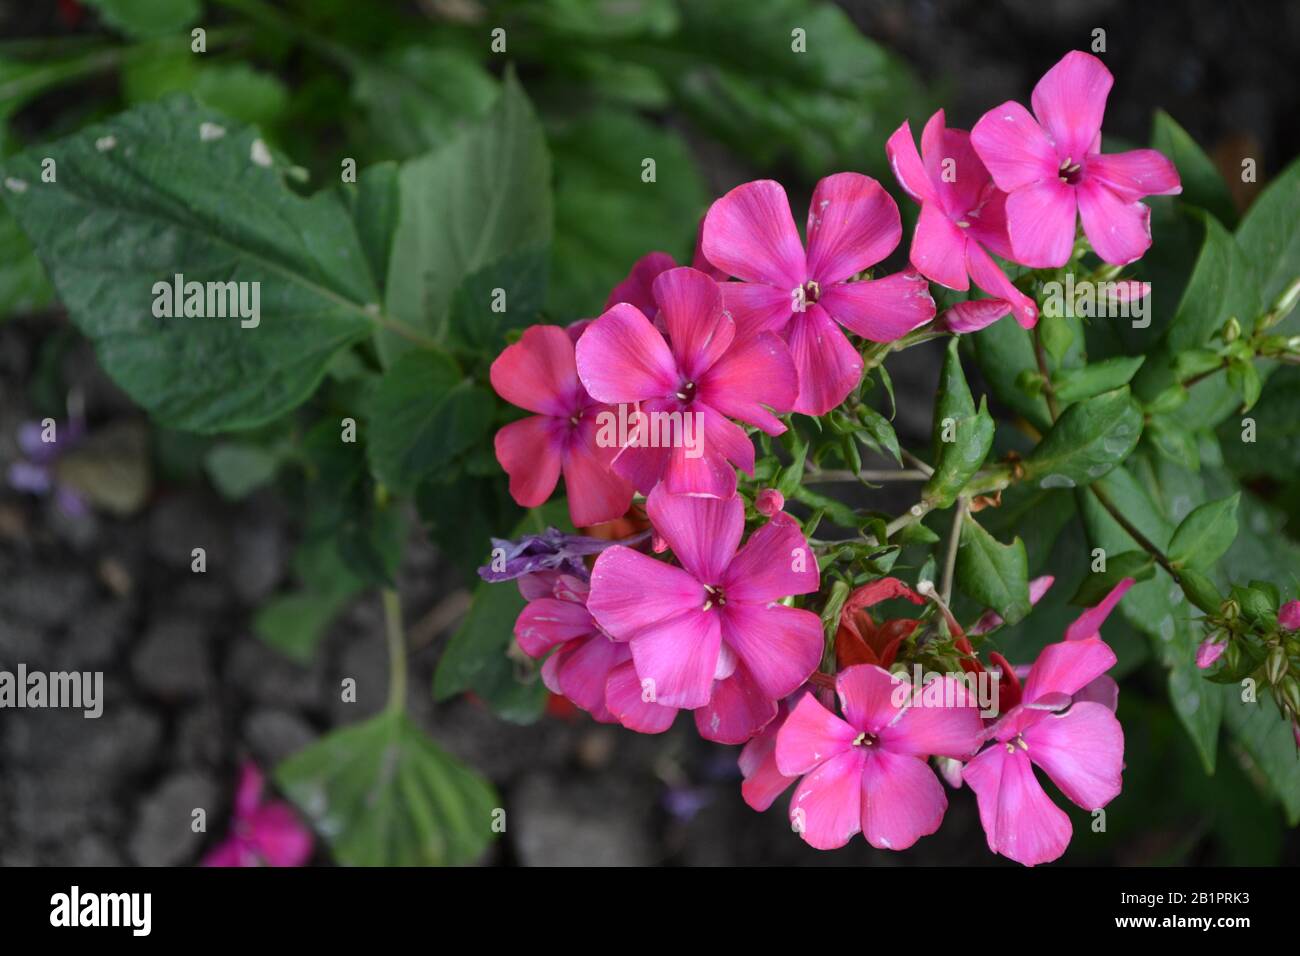 Phlox. Polemoniaceae. Growing flowers. Flowerbed. Garden. Floriculture. Pink inflorescence. Beautiful flowers. Green leaves. High bushes. Summer. Hori Stock Photo